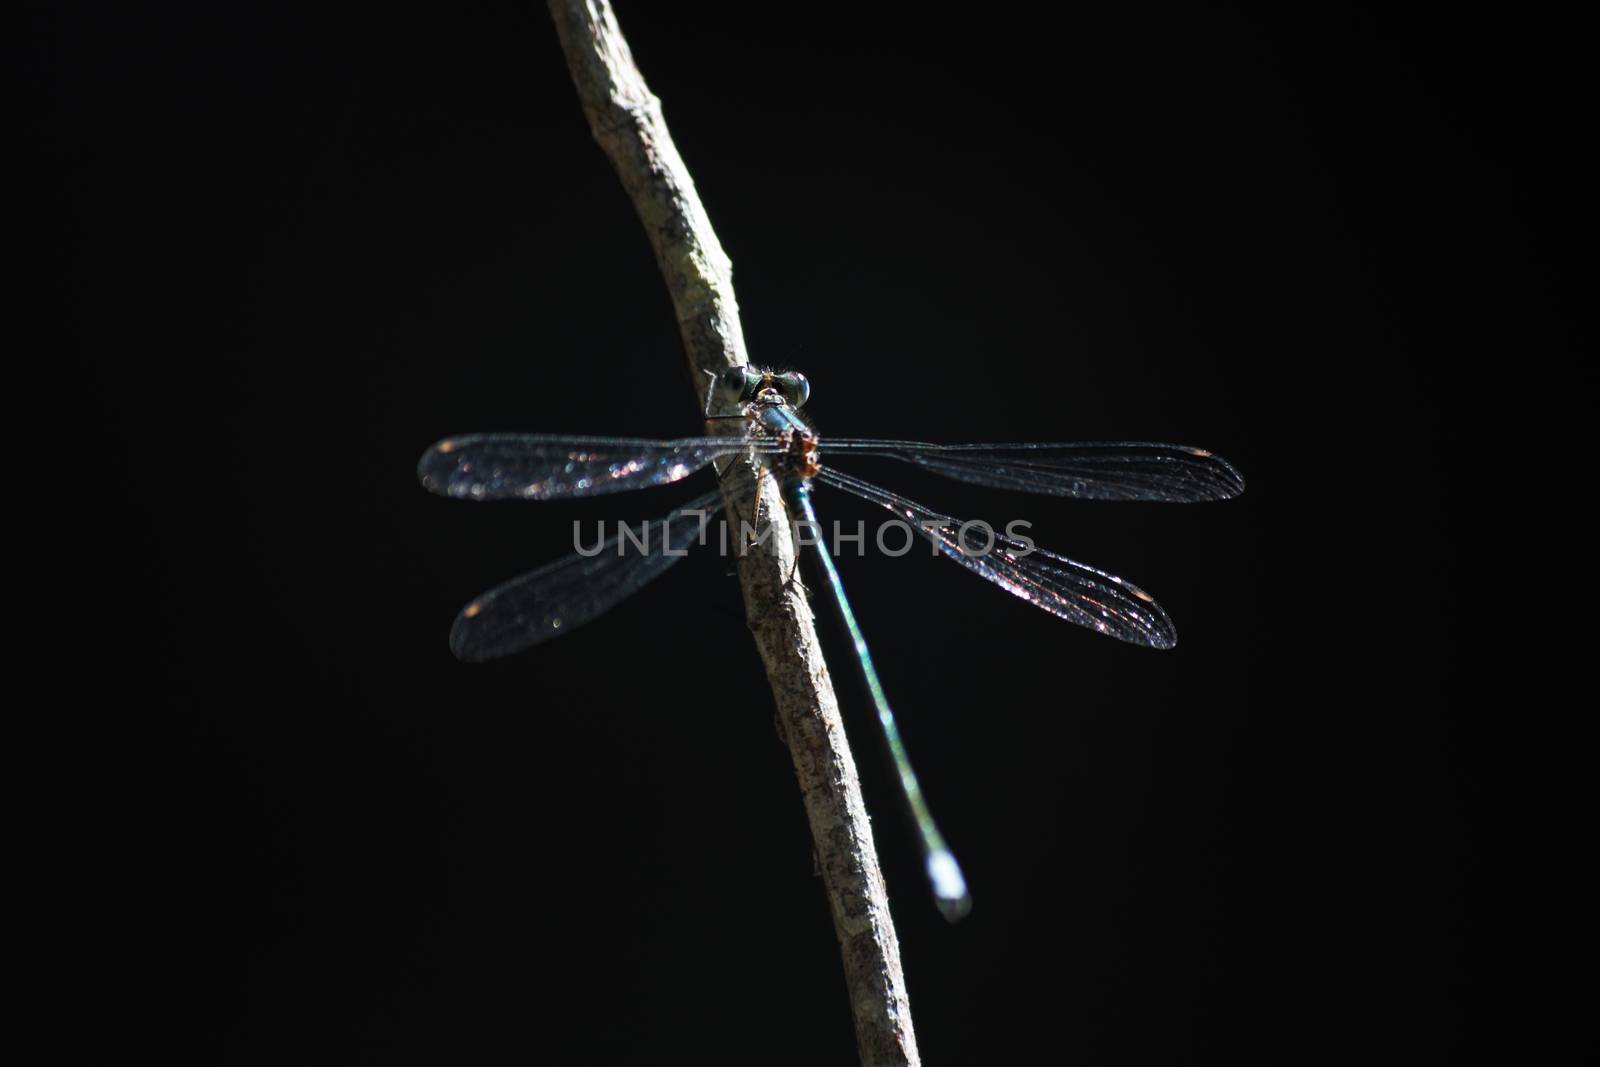 Pallid Spreadwing Damselfly On A Twig (Lestes pallidus) by jjvanginkel